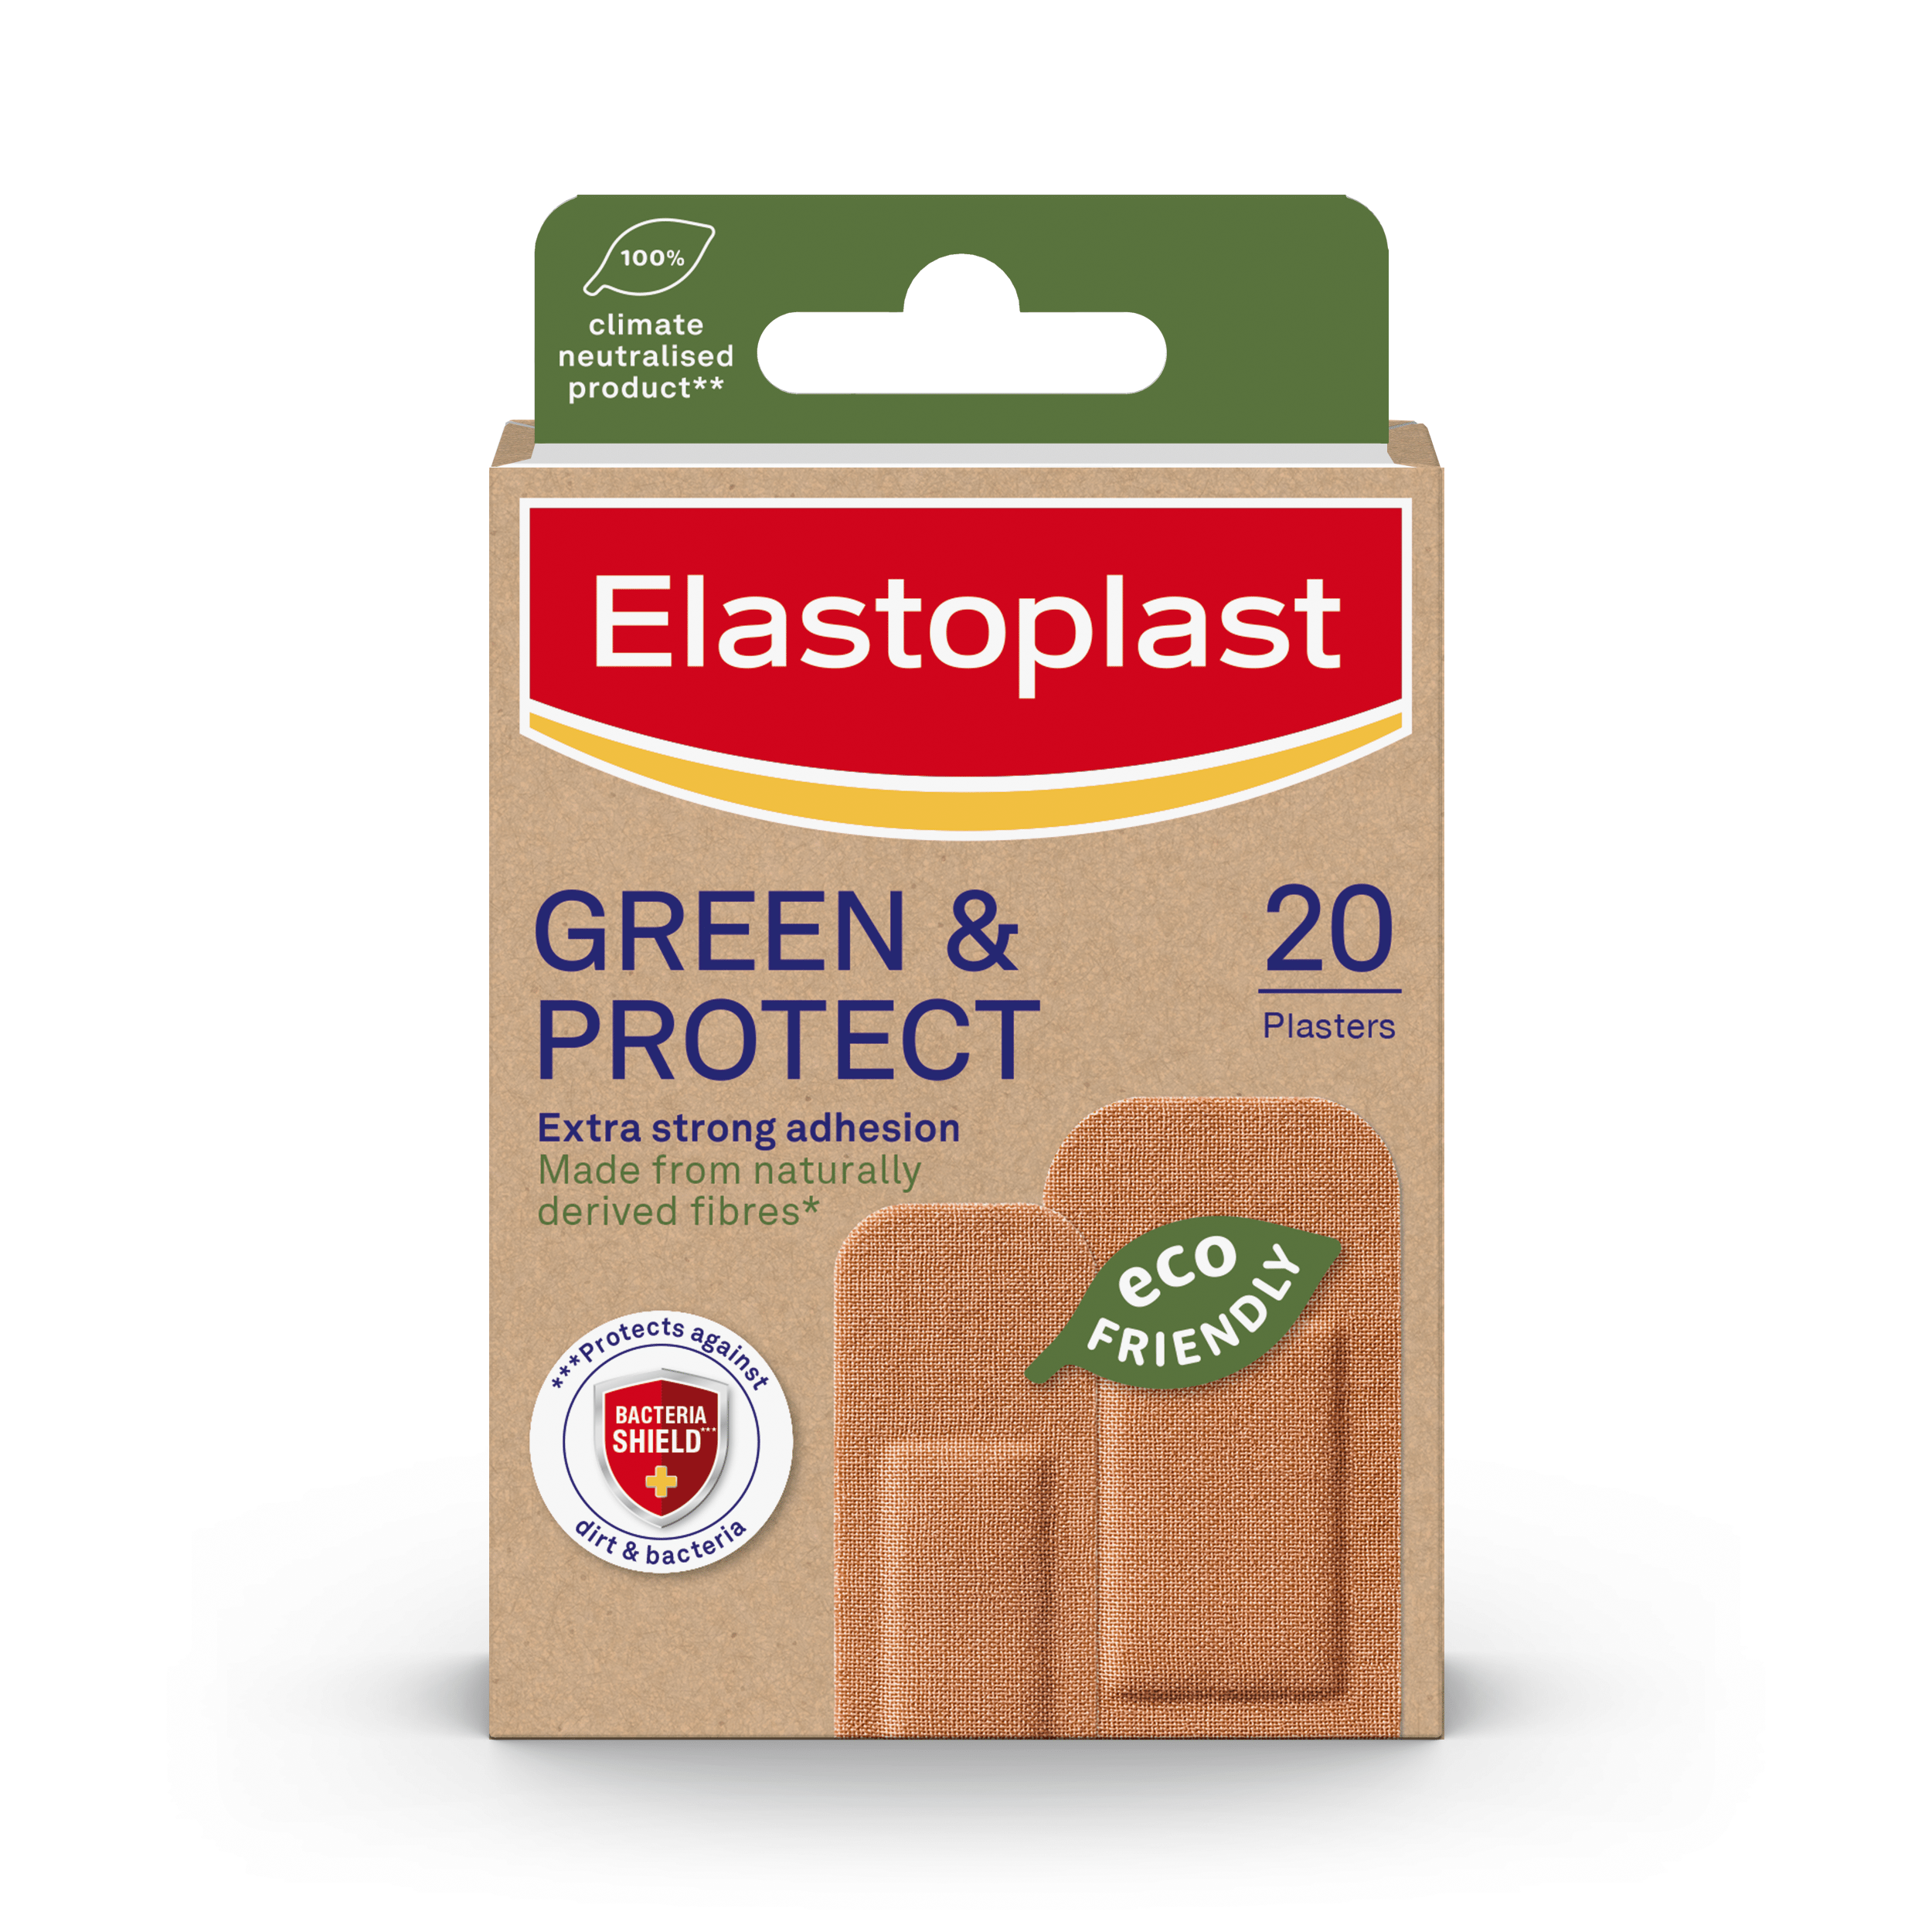 Elastoplast Green & Protect Plasters